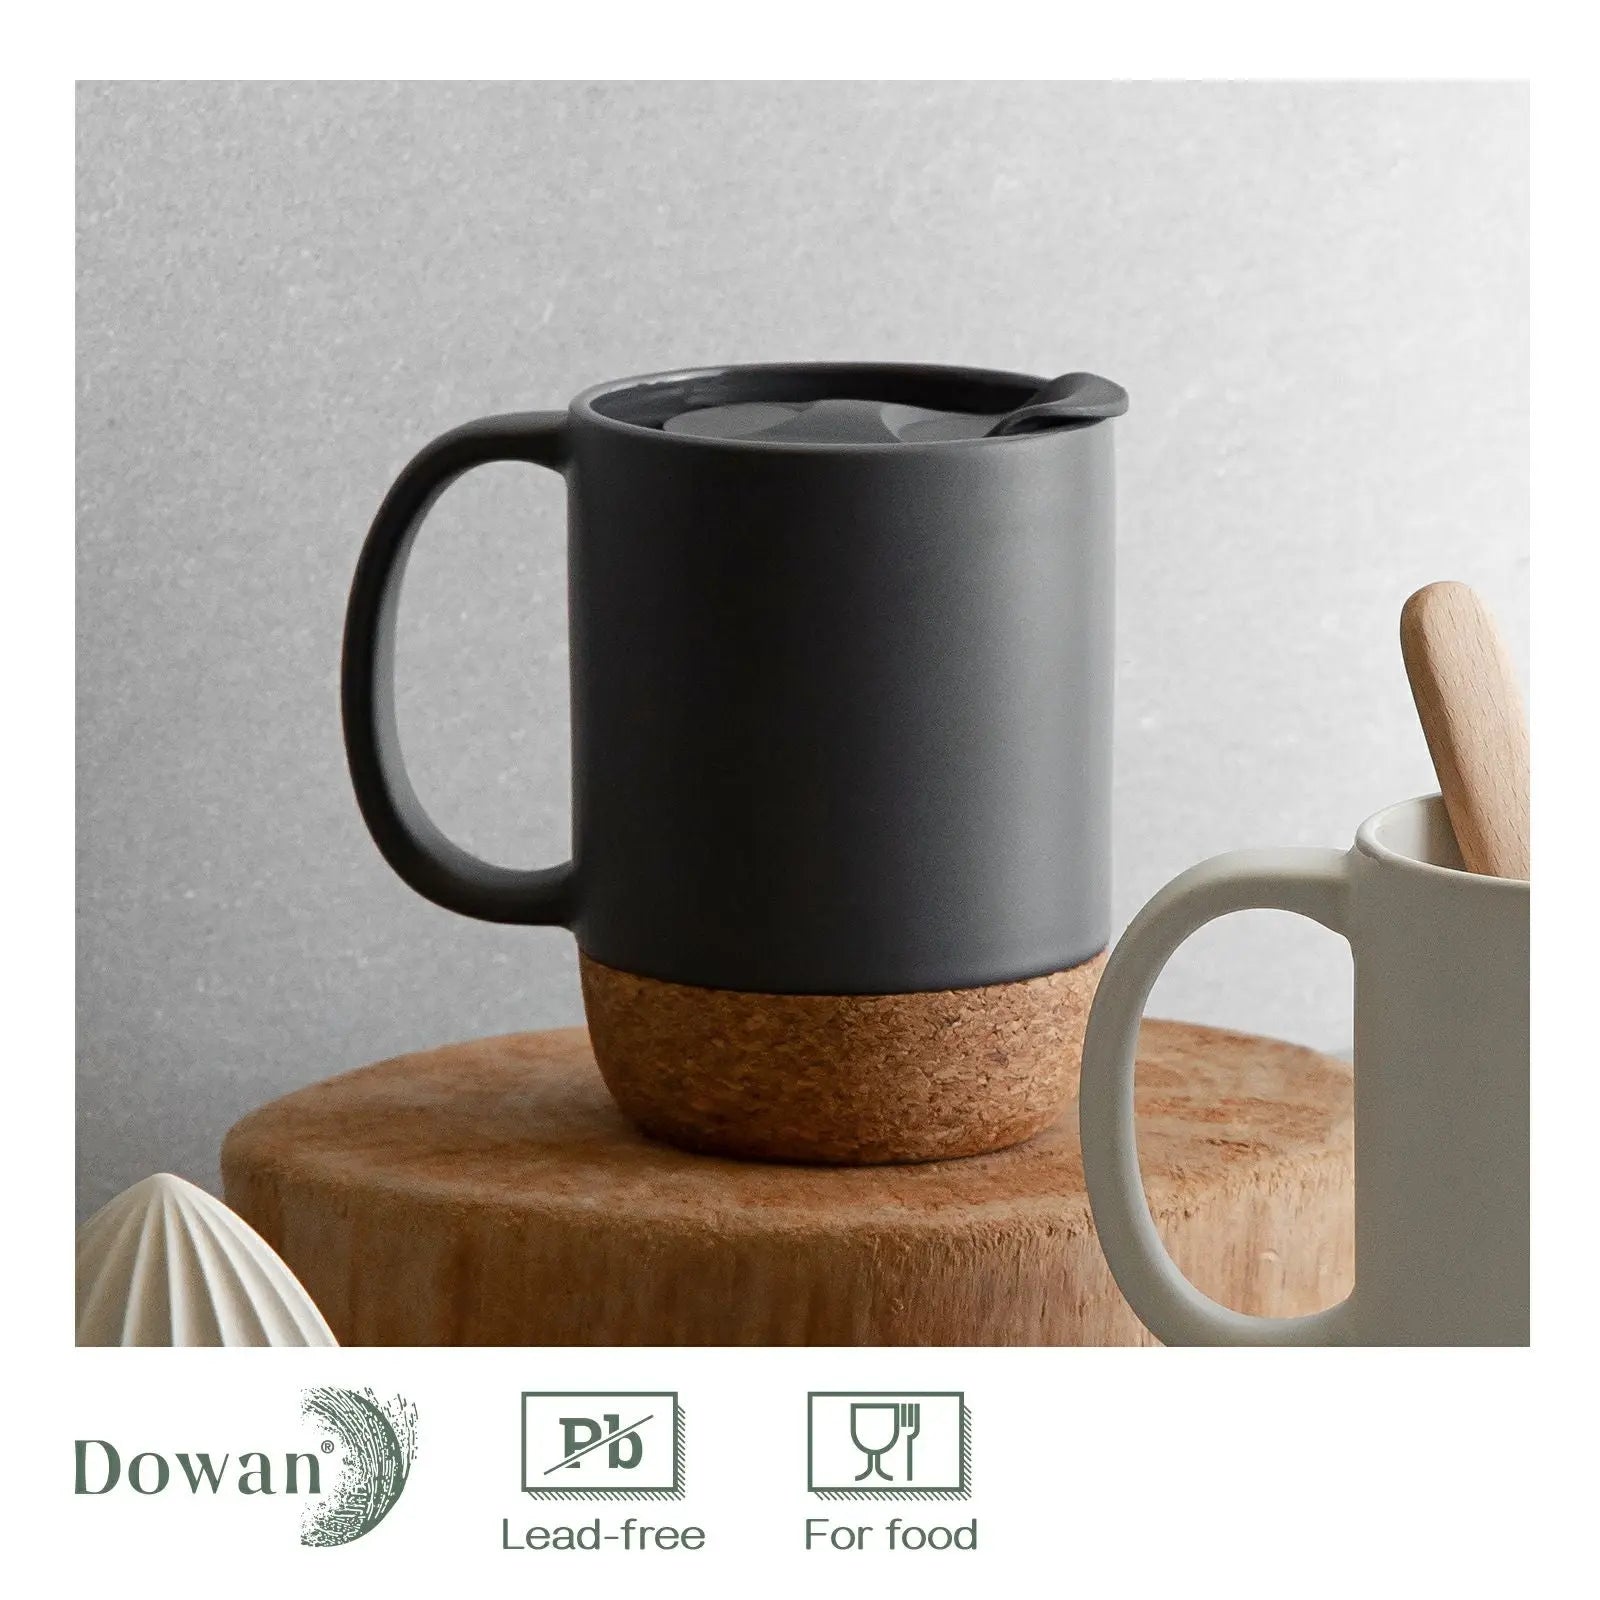 Pine Cones Dishwasher Safe Microwavable Ceramic Coffee Mug 15 oz